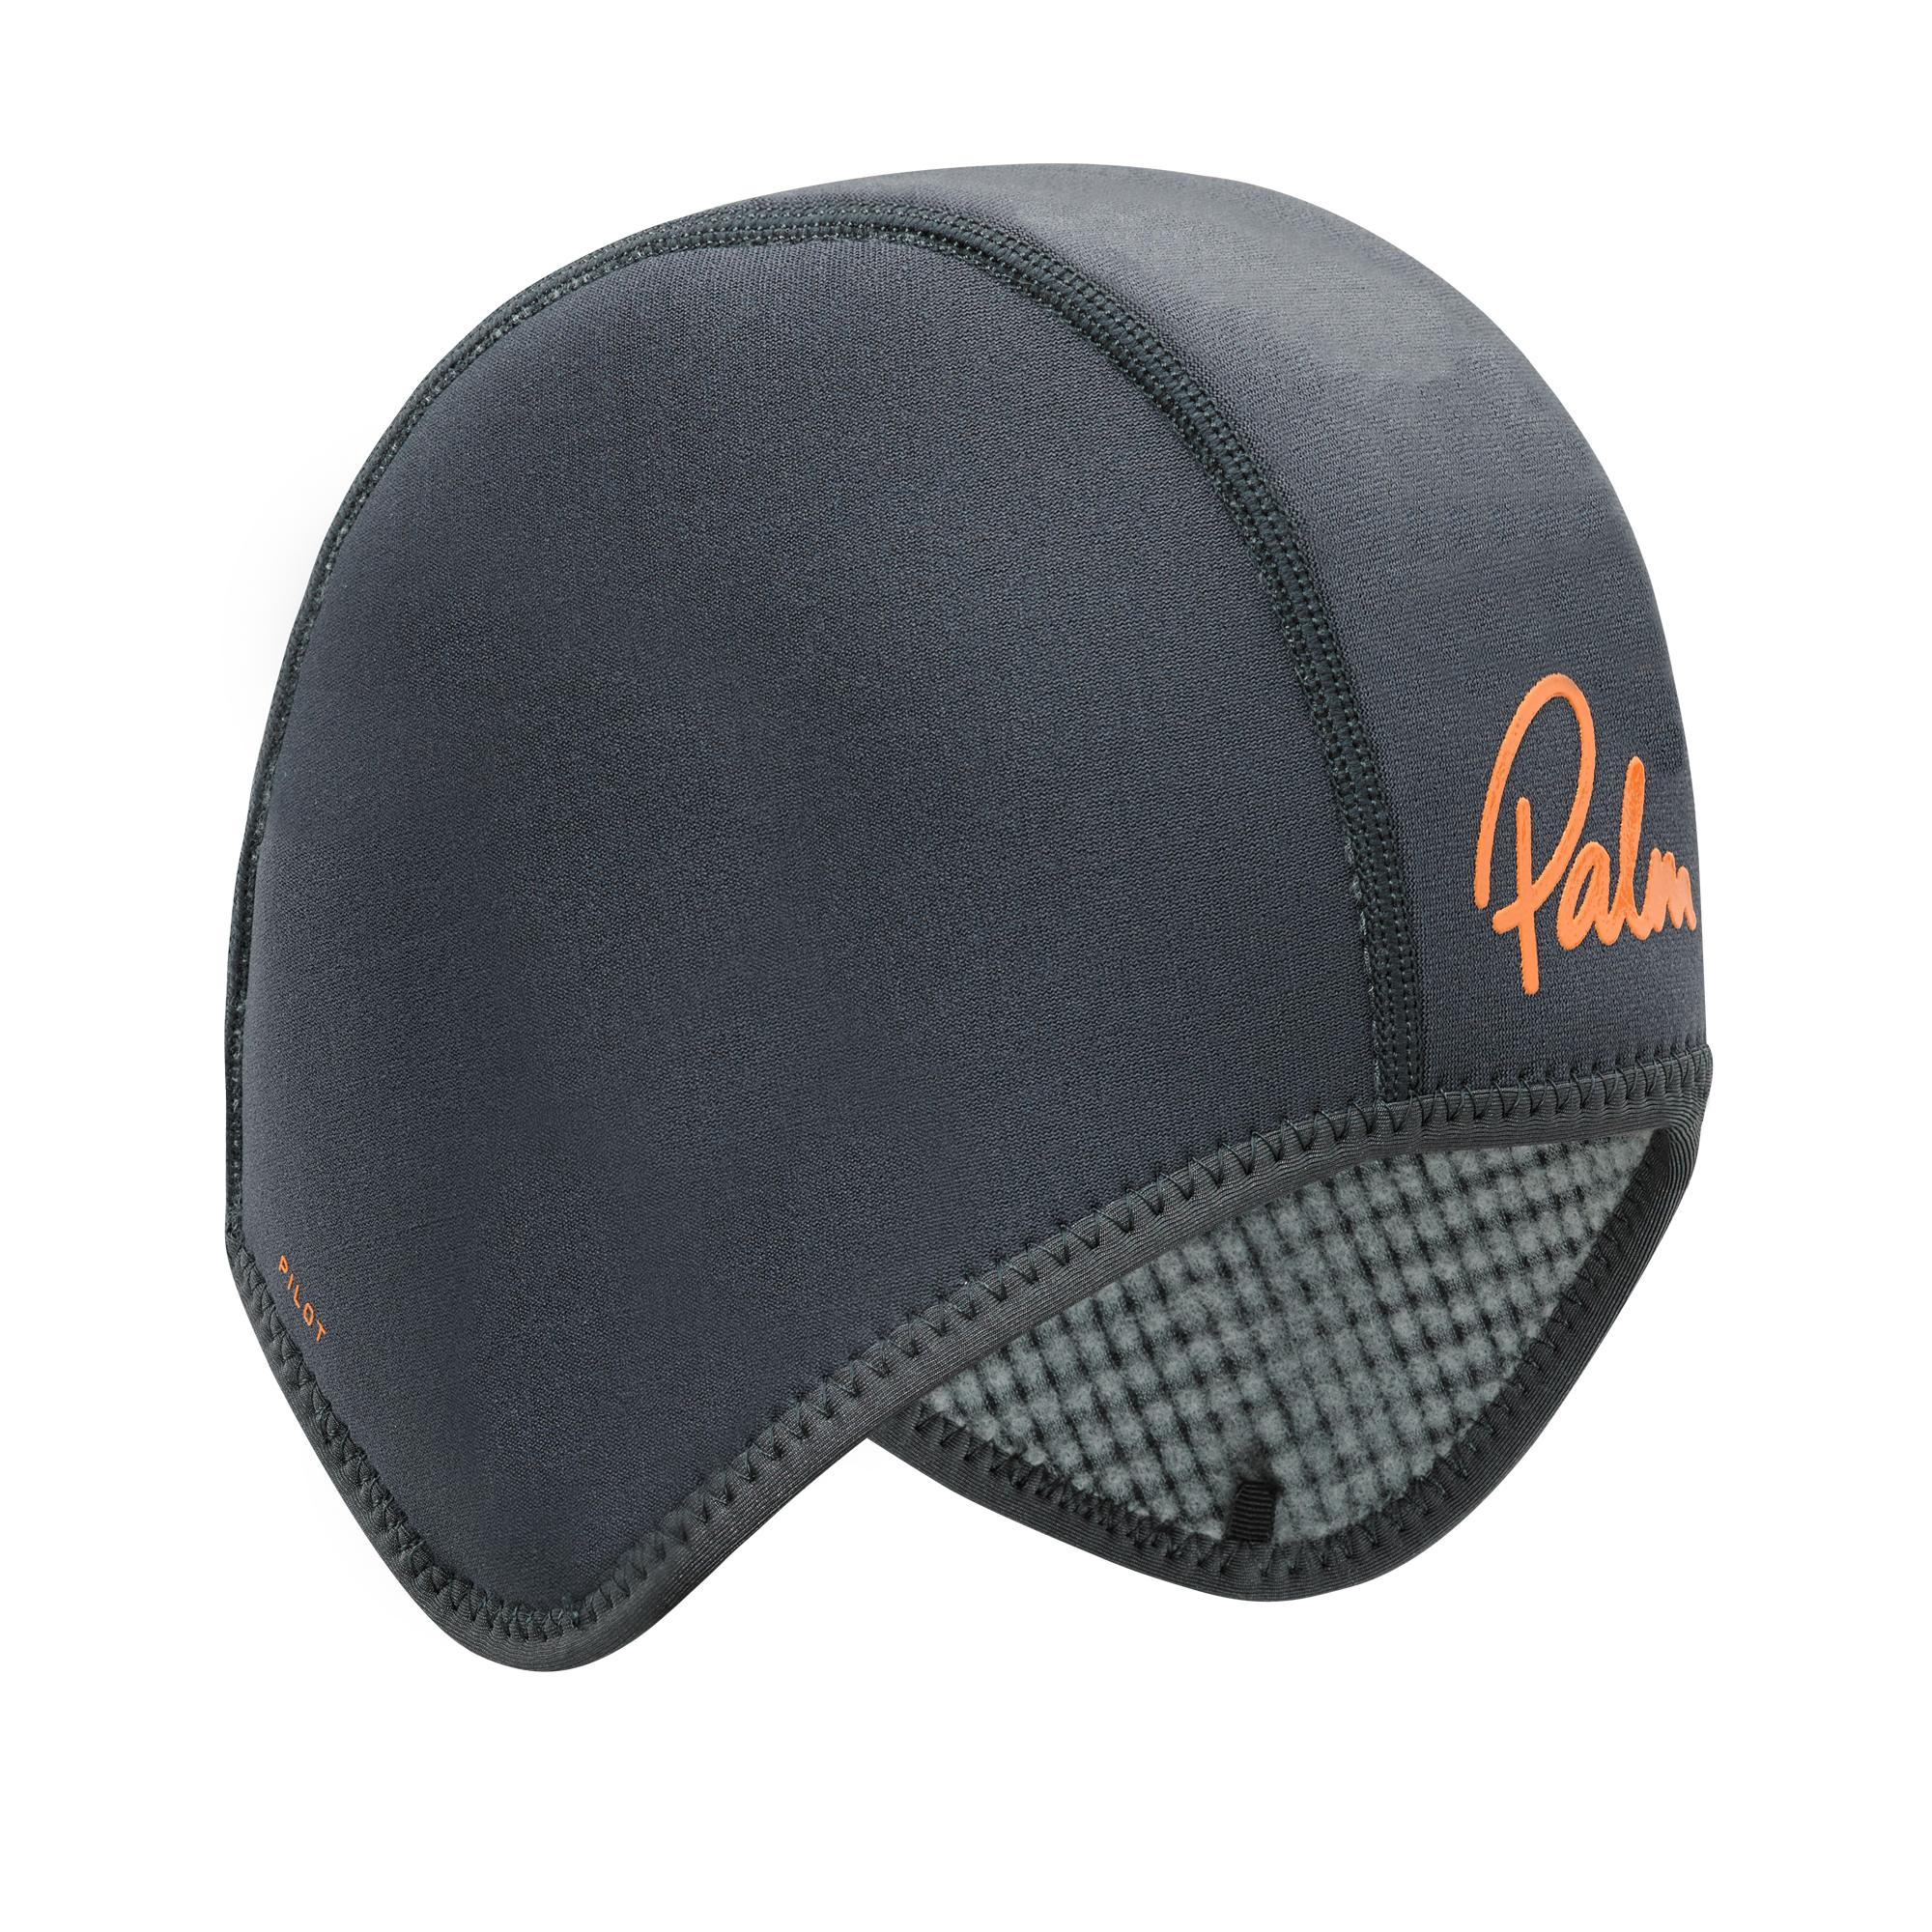 Palm Pilot cap made of neoprene